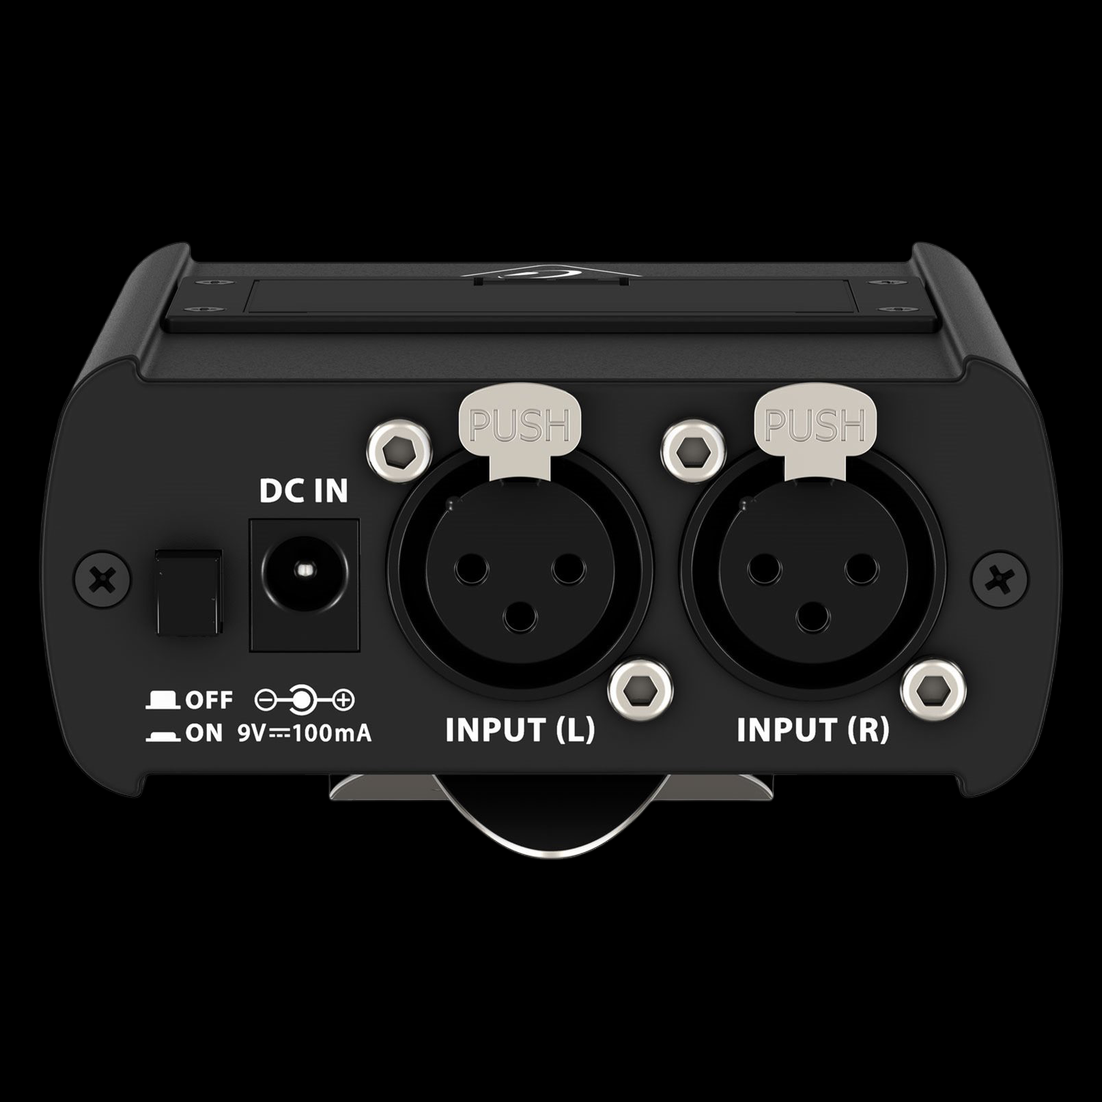 BEHRINGER POWERPLAY P1 Personal In-Ear Monitor Amplifier